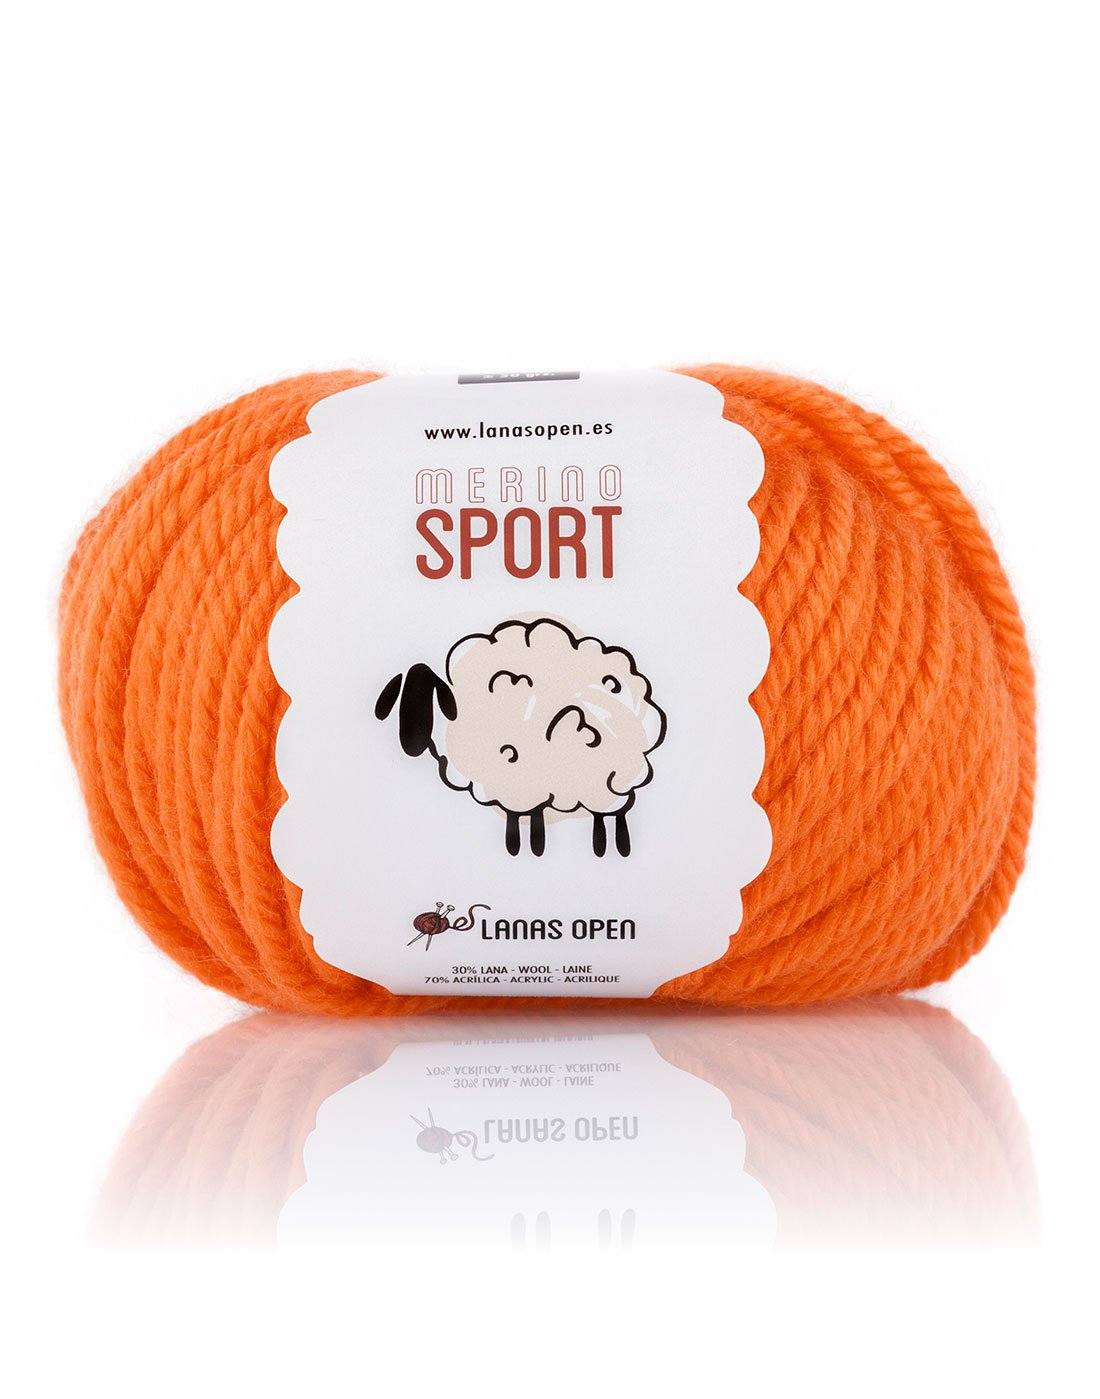 Ovillo de lanas Open colección Sport Merino